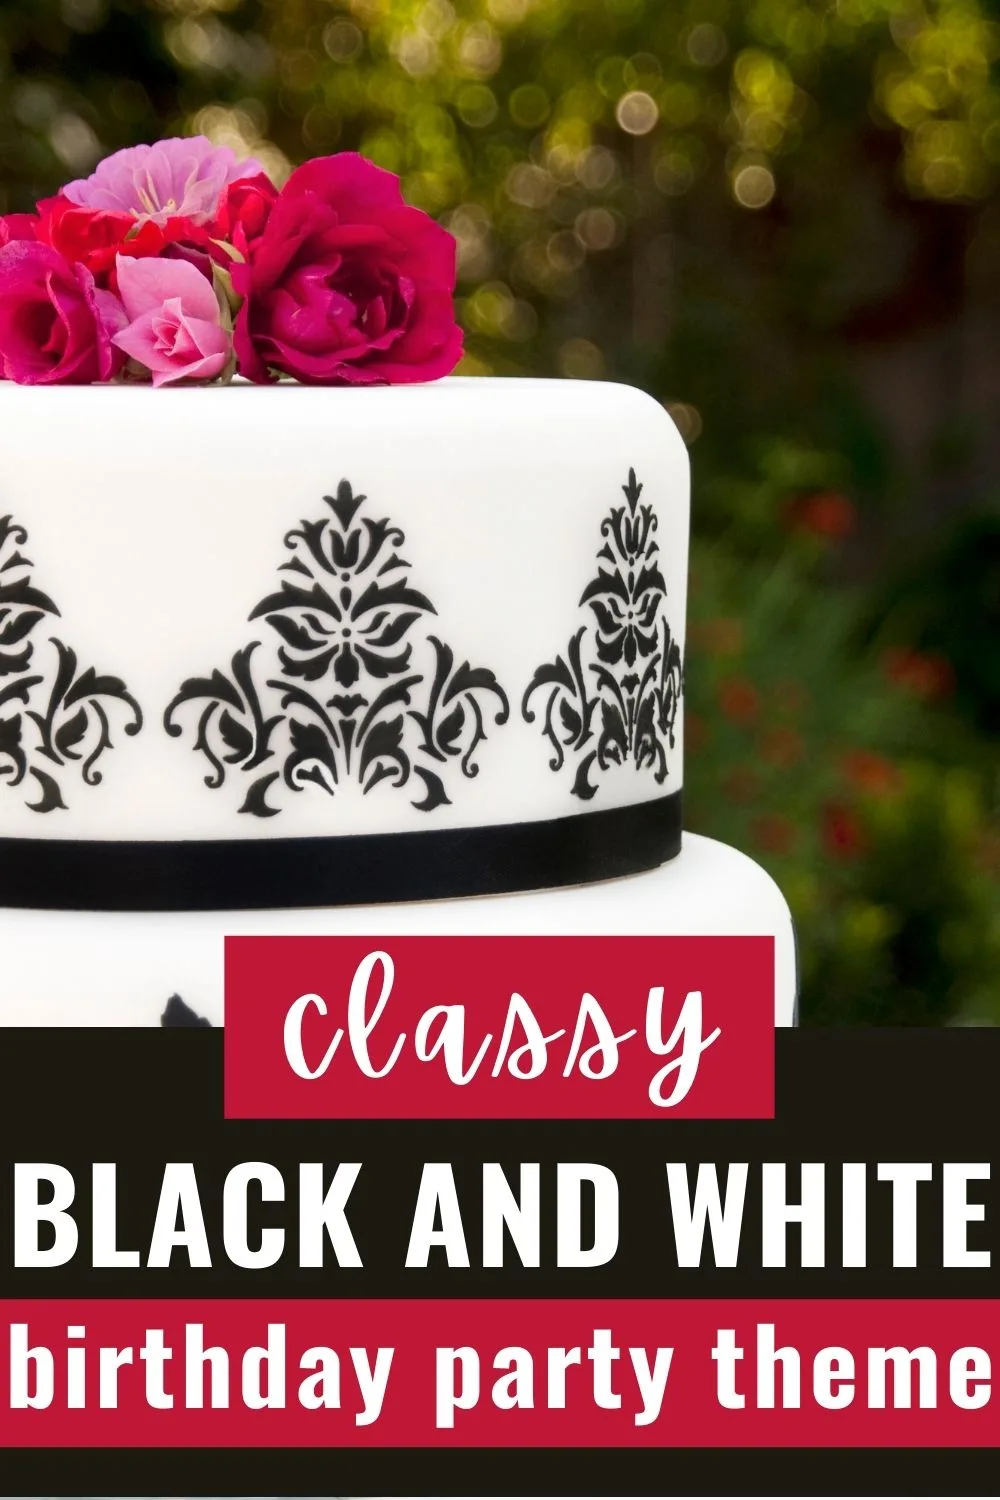 Classy black and white birthday party theme ideas